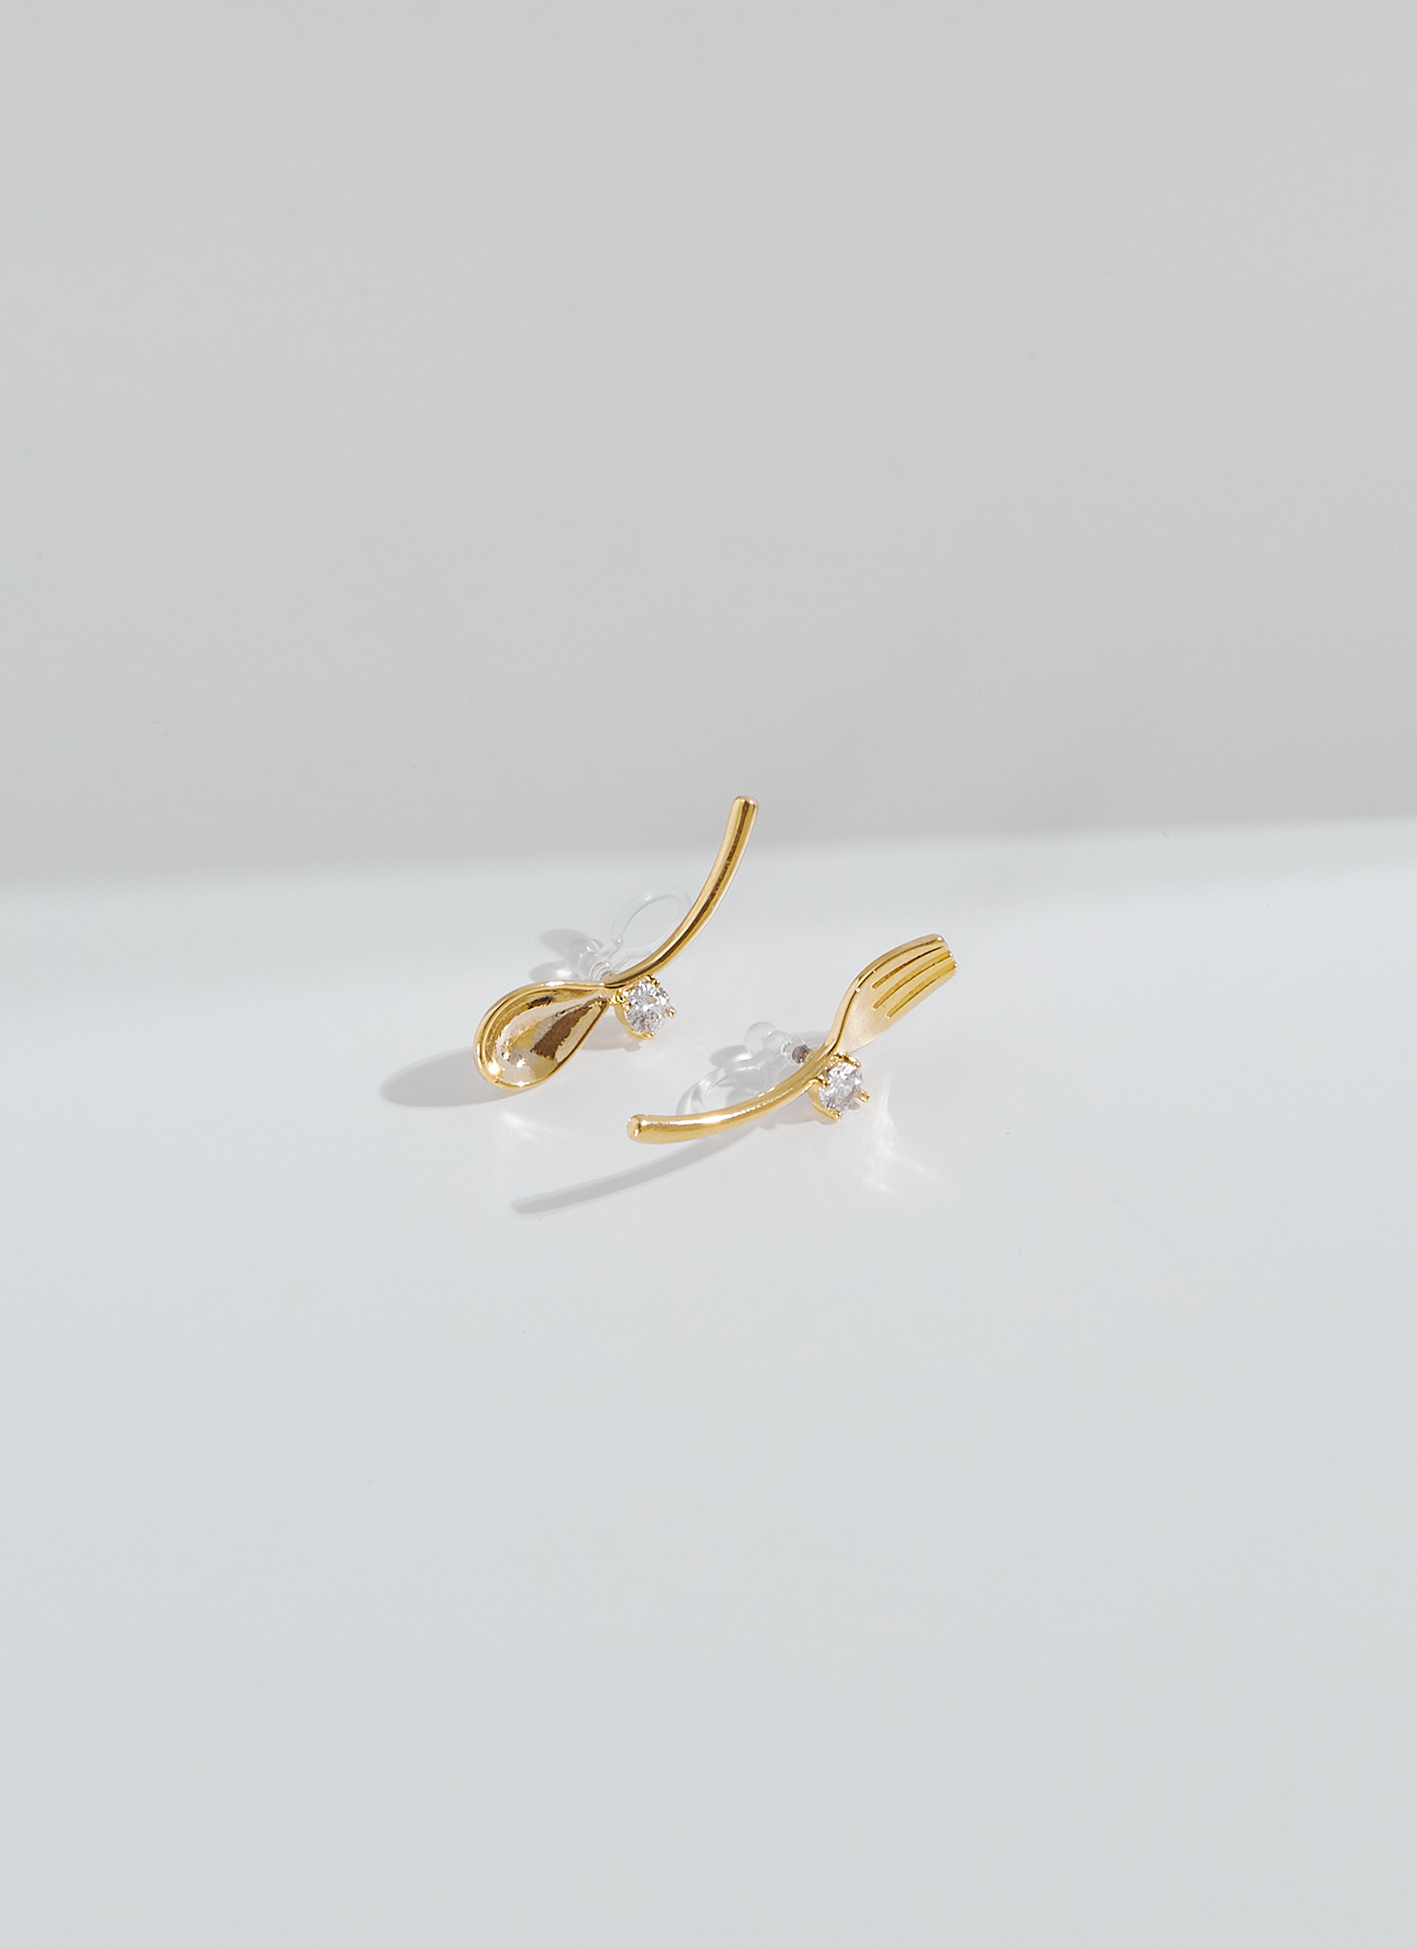 Eco安珂,韓國飾品,韓國耳環,耳針式耳環,矽膠夾耳環,透明耳夾耳環,餐具耳環,湯匙耳環